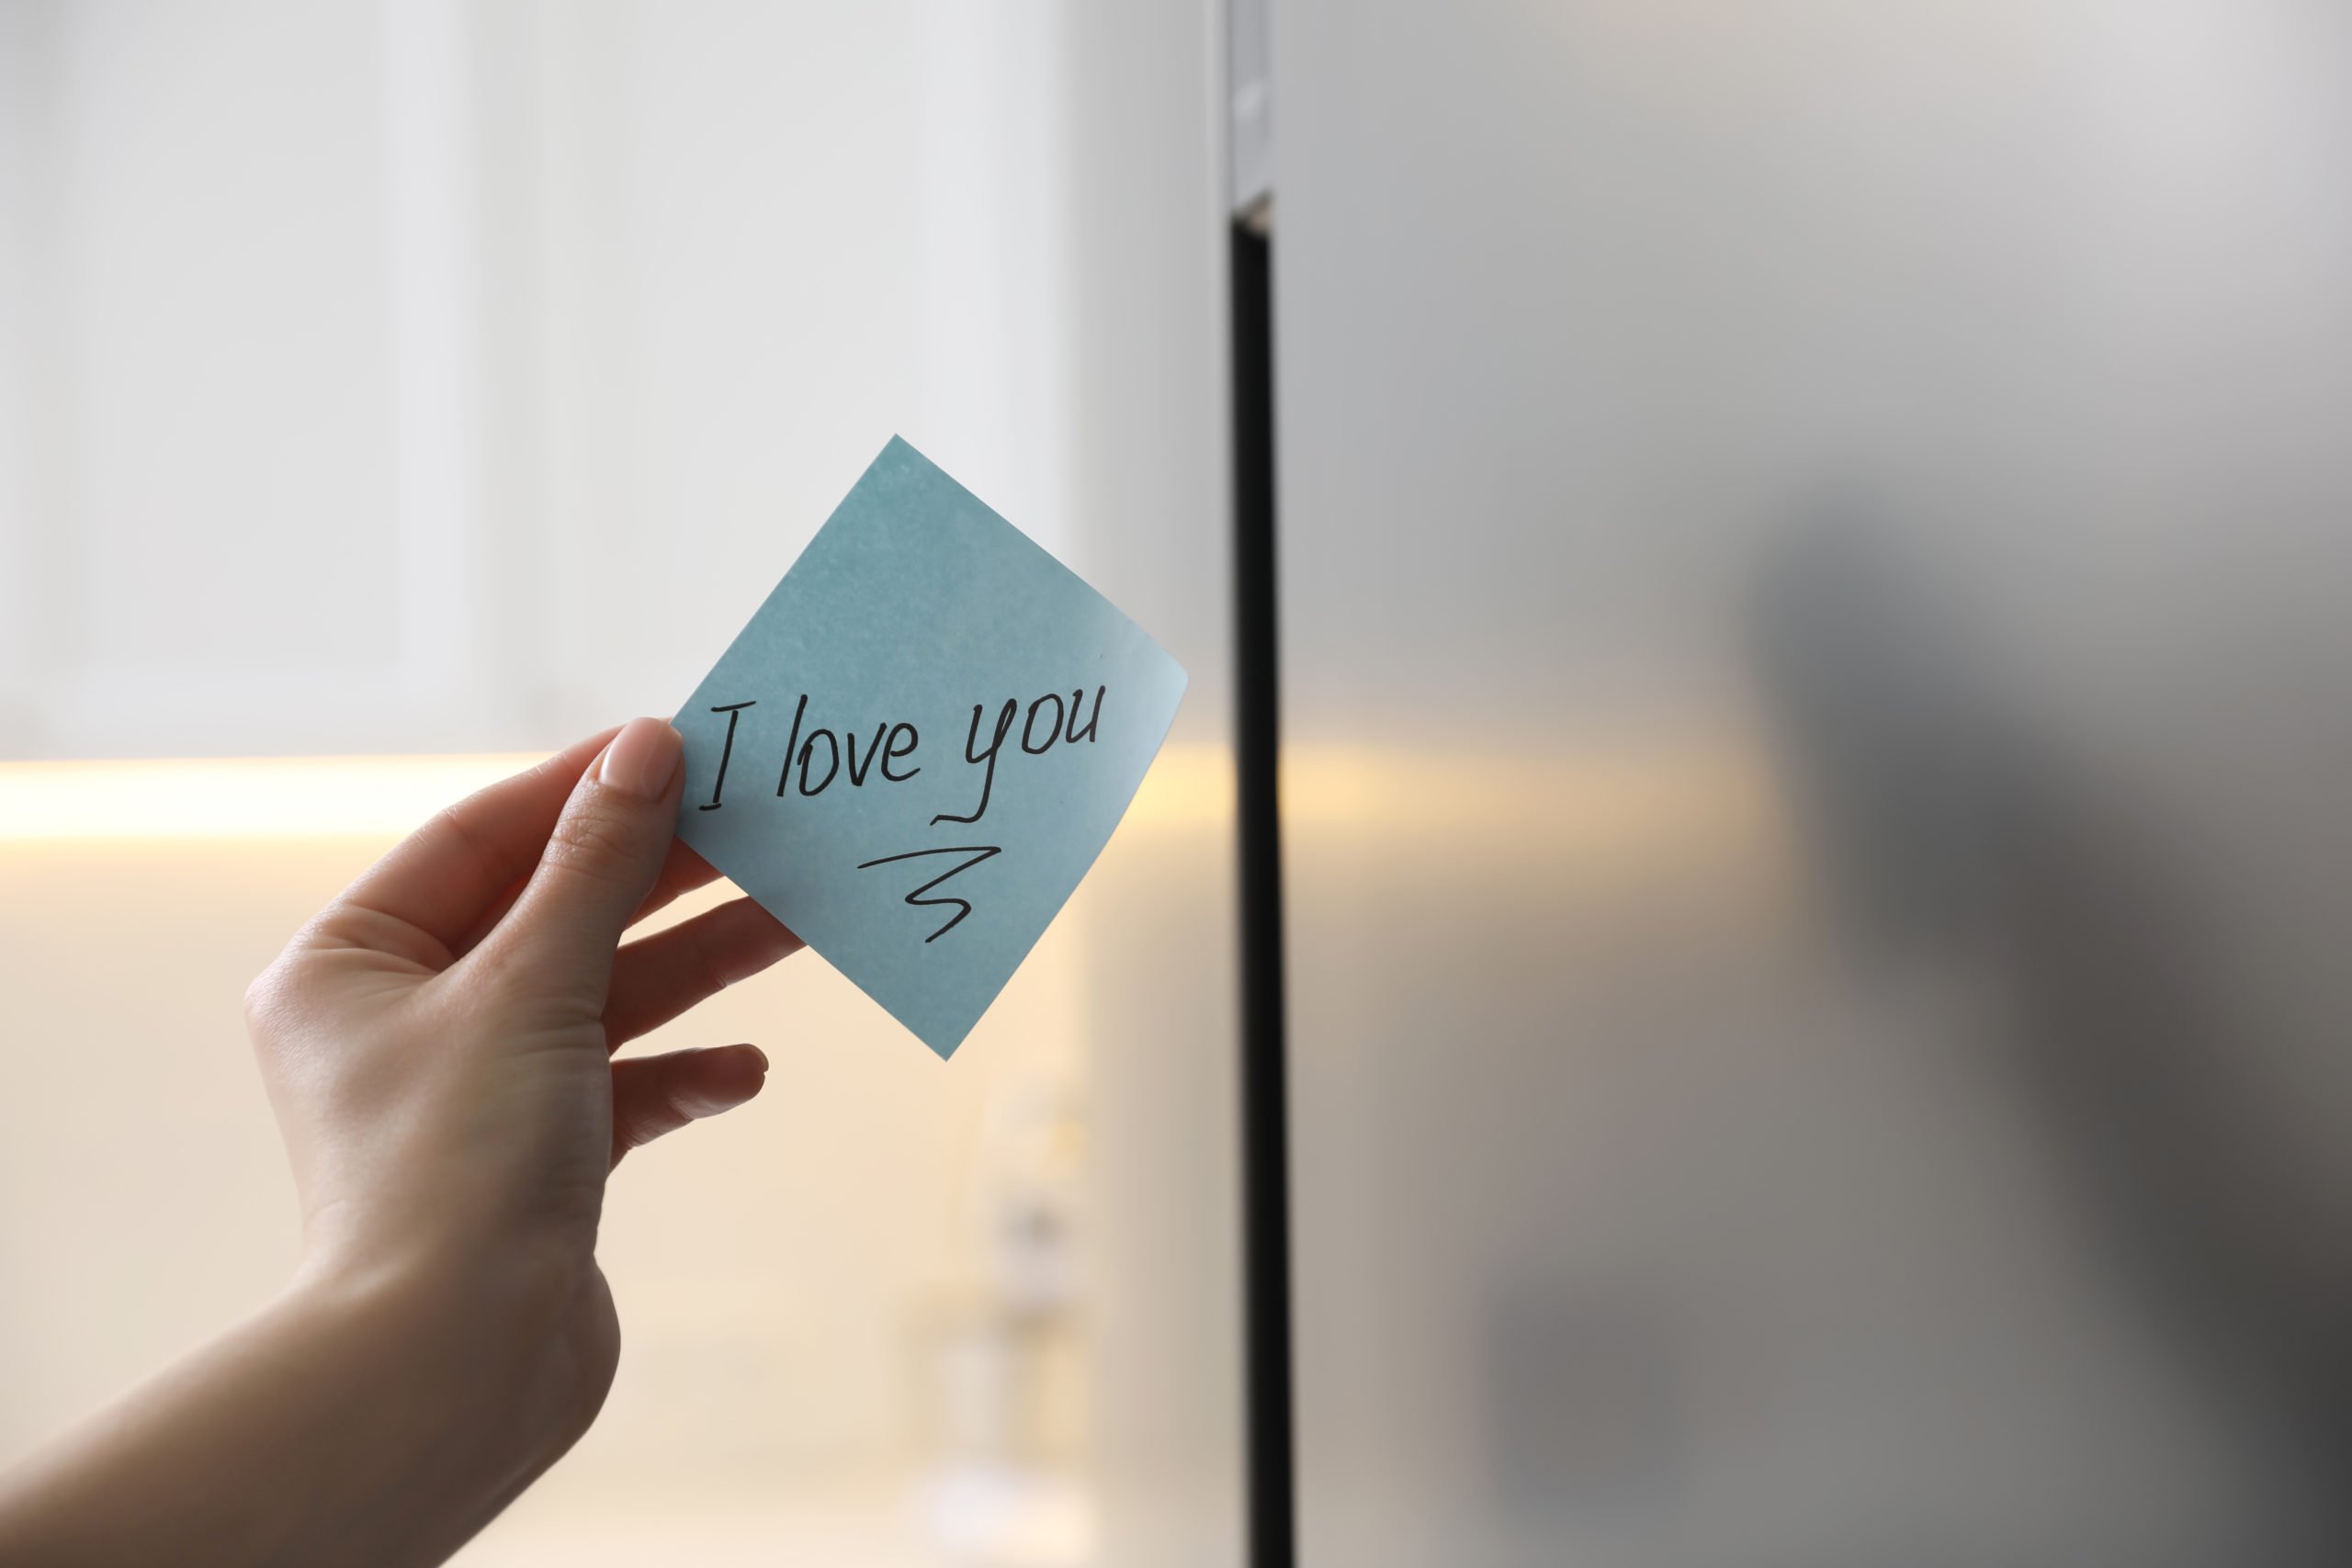 a handwritten note saying "i love you"